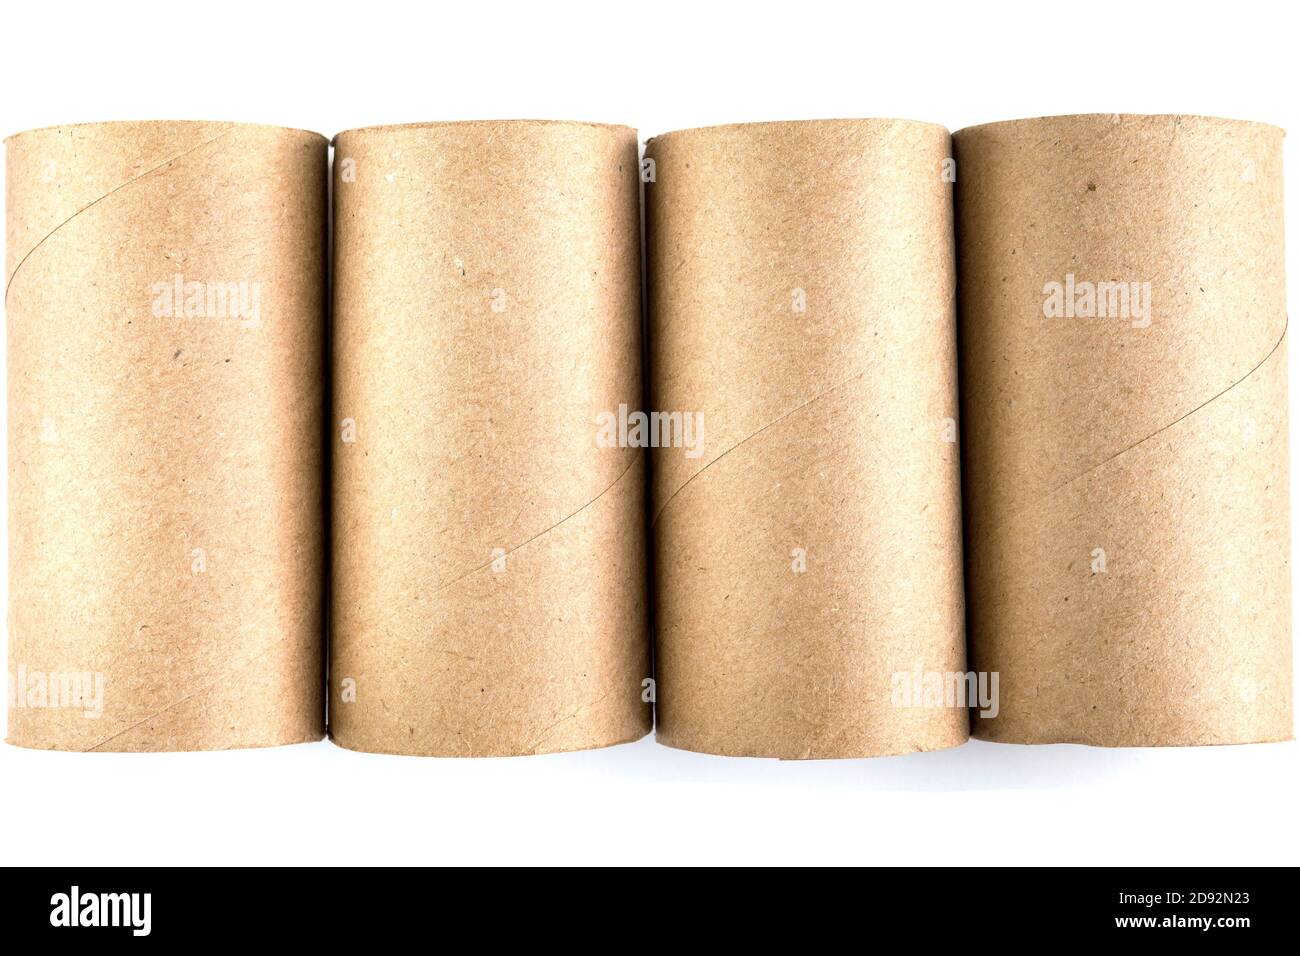 Tubos de papel higiénico fotografías e imágenes de alta resolución - Alamy